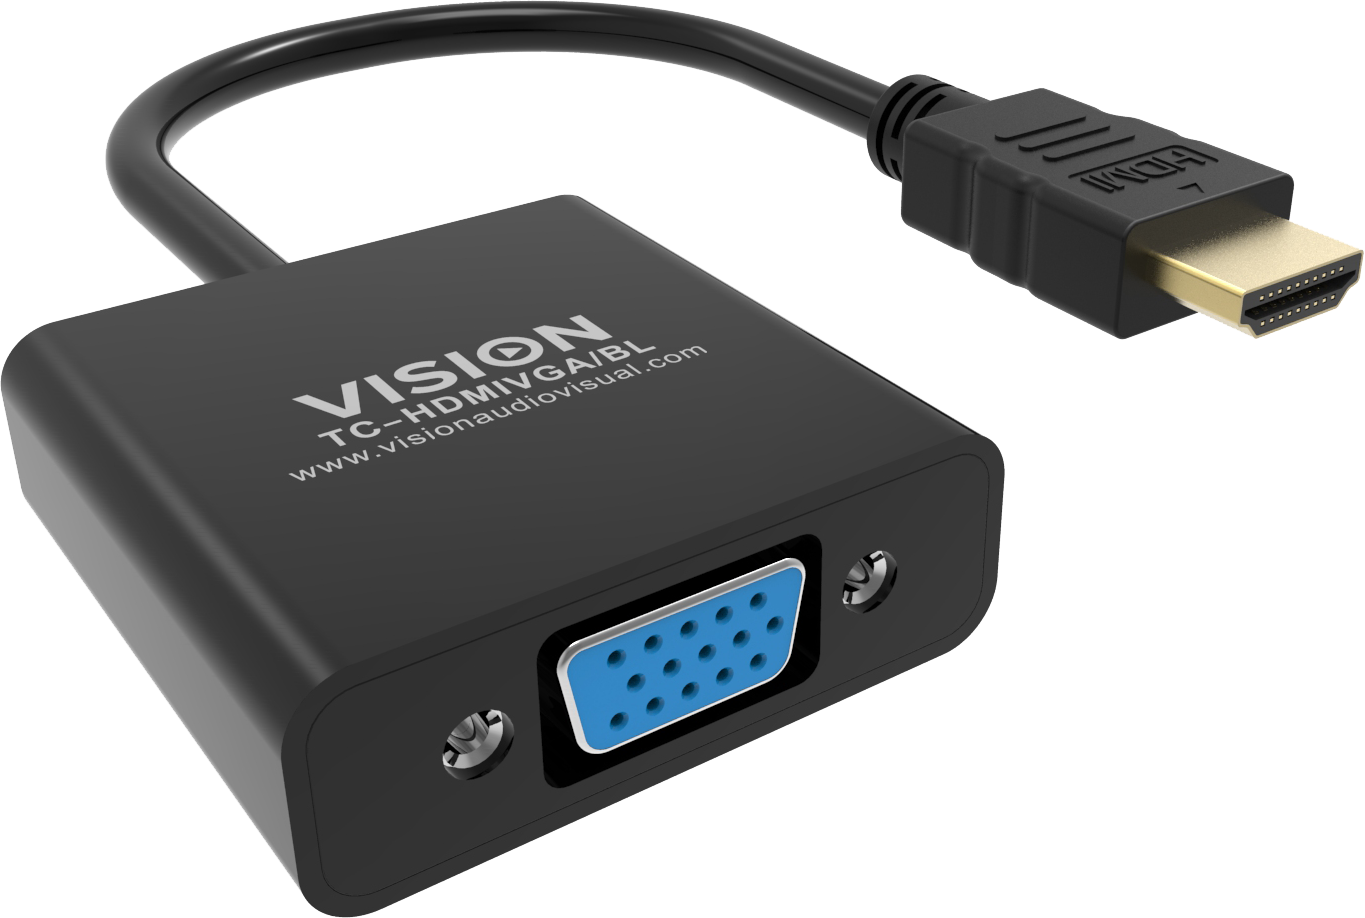 VA-HDMI-VGA, Adaptateur HDMI vers VGA - Black Box